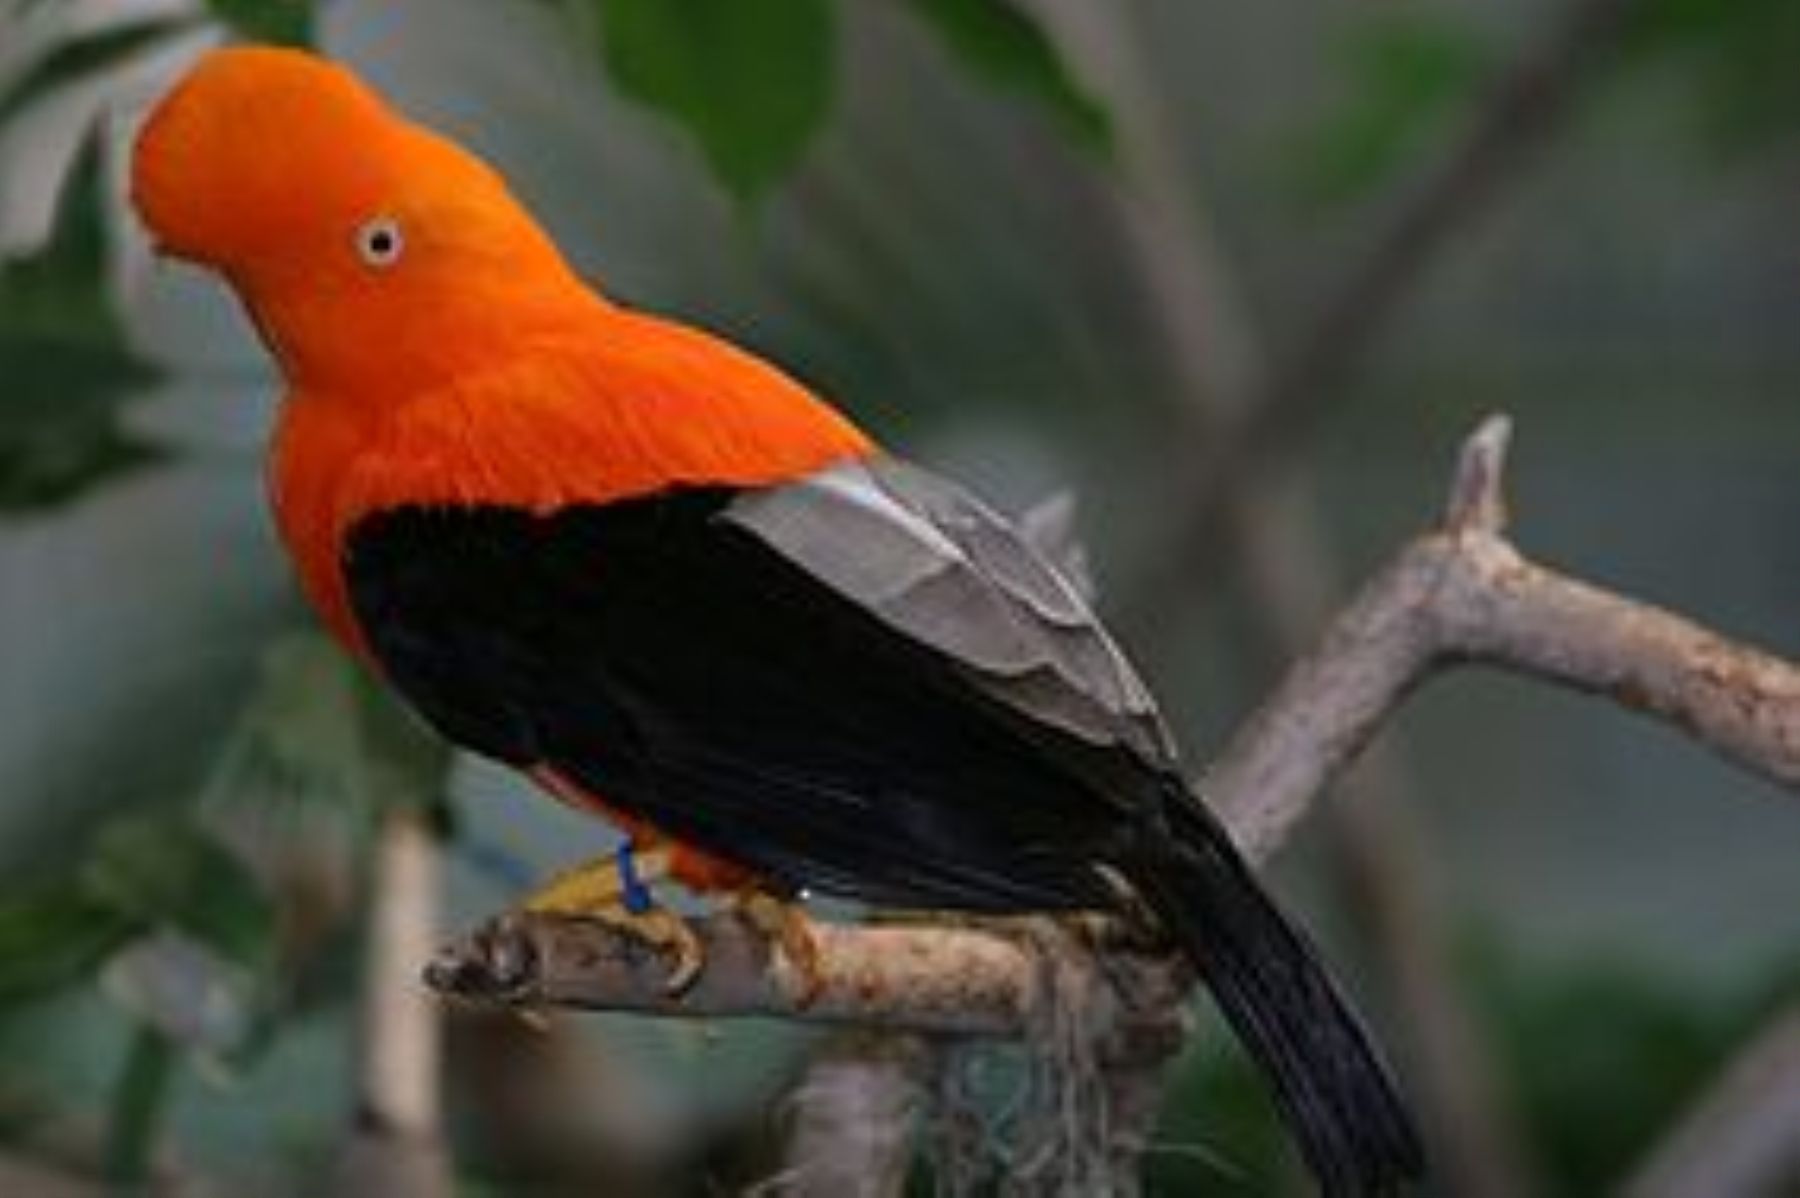 The Andean Cock-of-the-Rock (Rupicola peruviana), is Peru’s national bird.